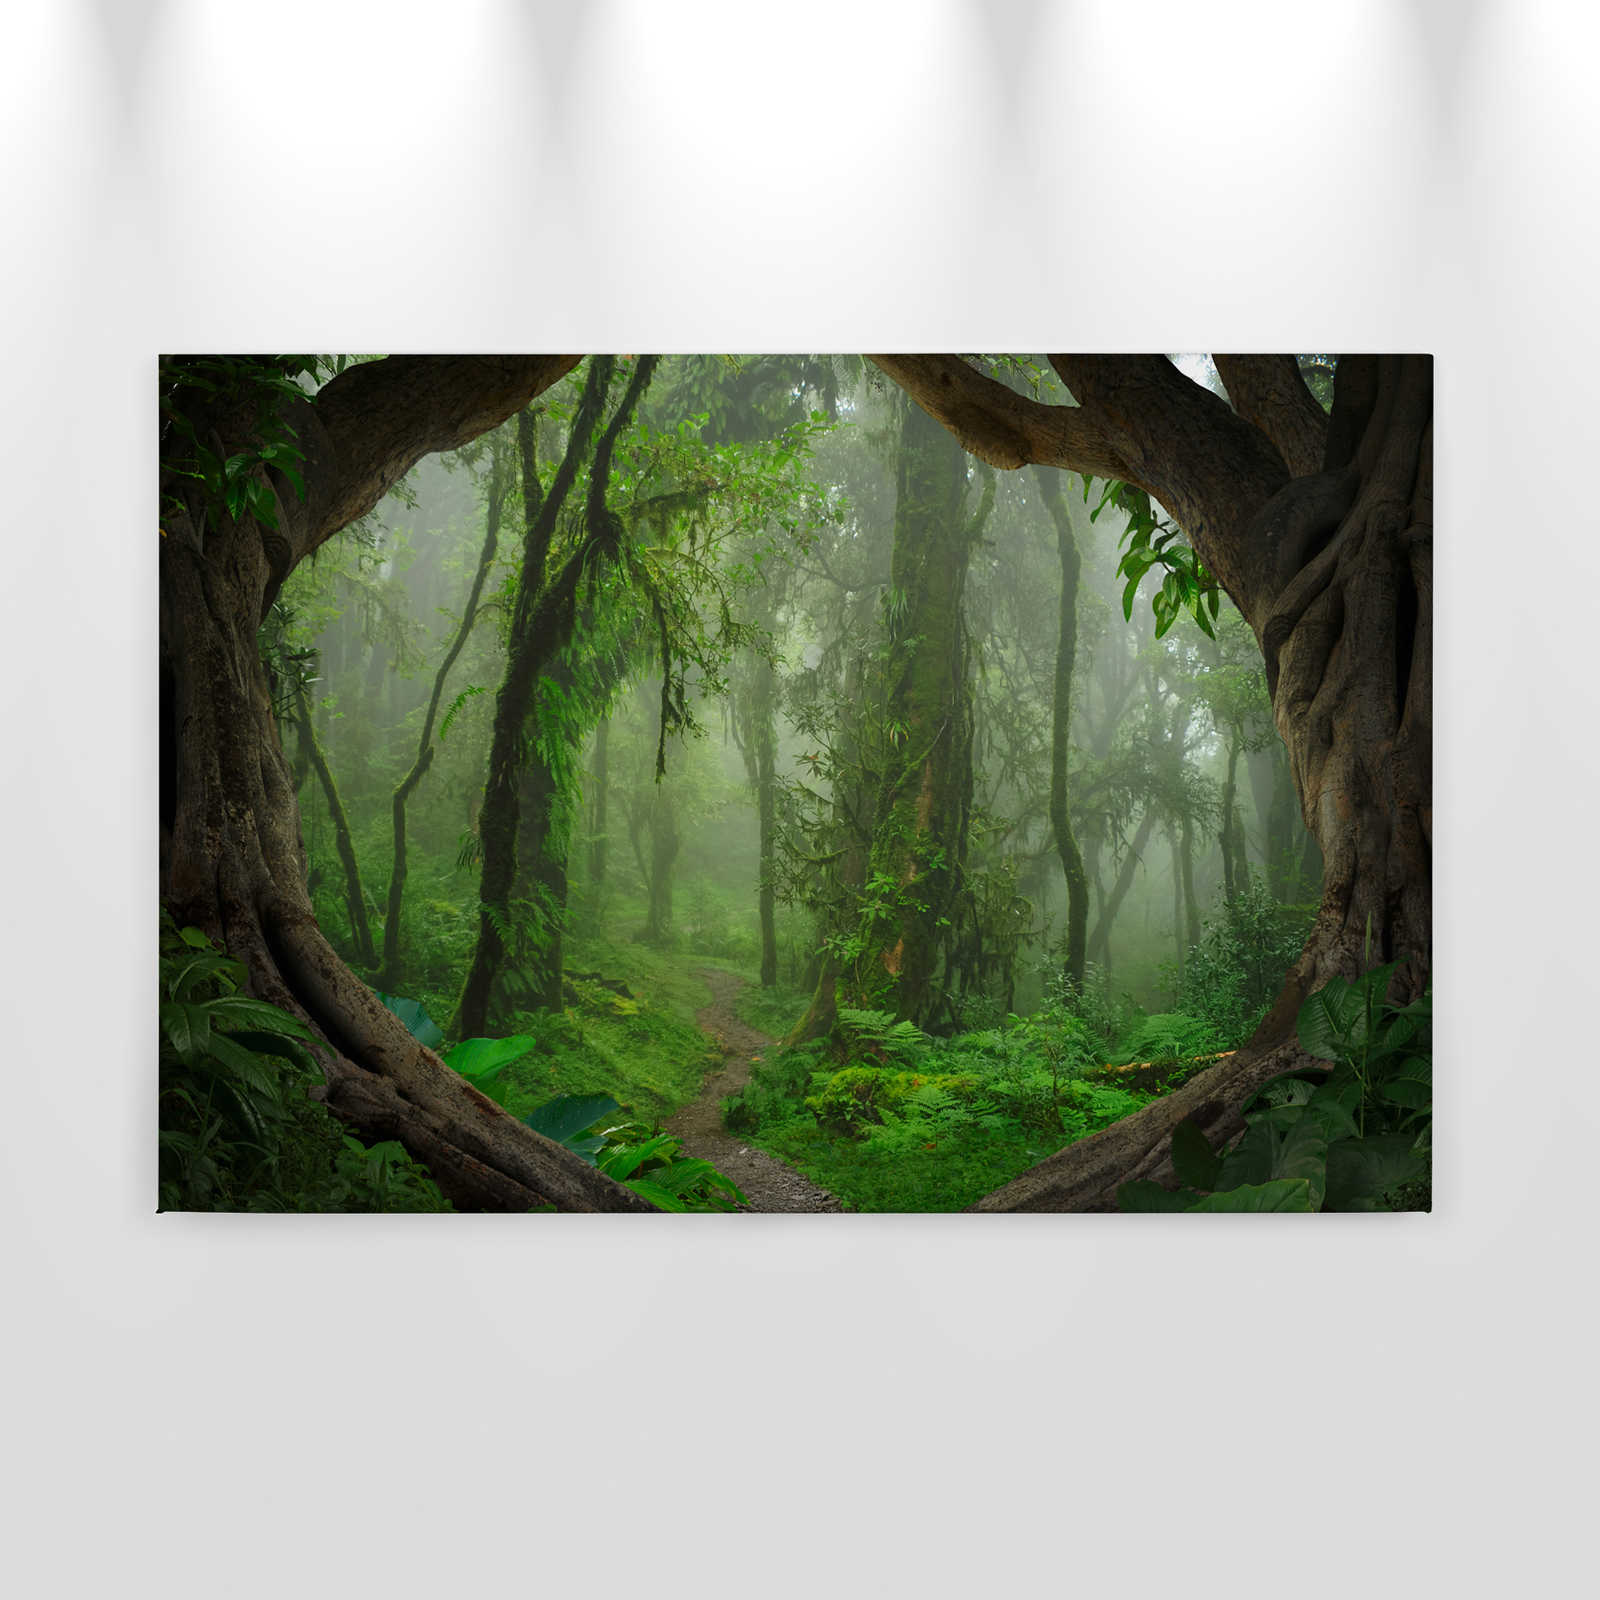             Magic Tropical Forest Canvas - 0.90 m x 0.60 m
        